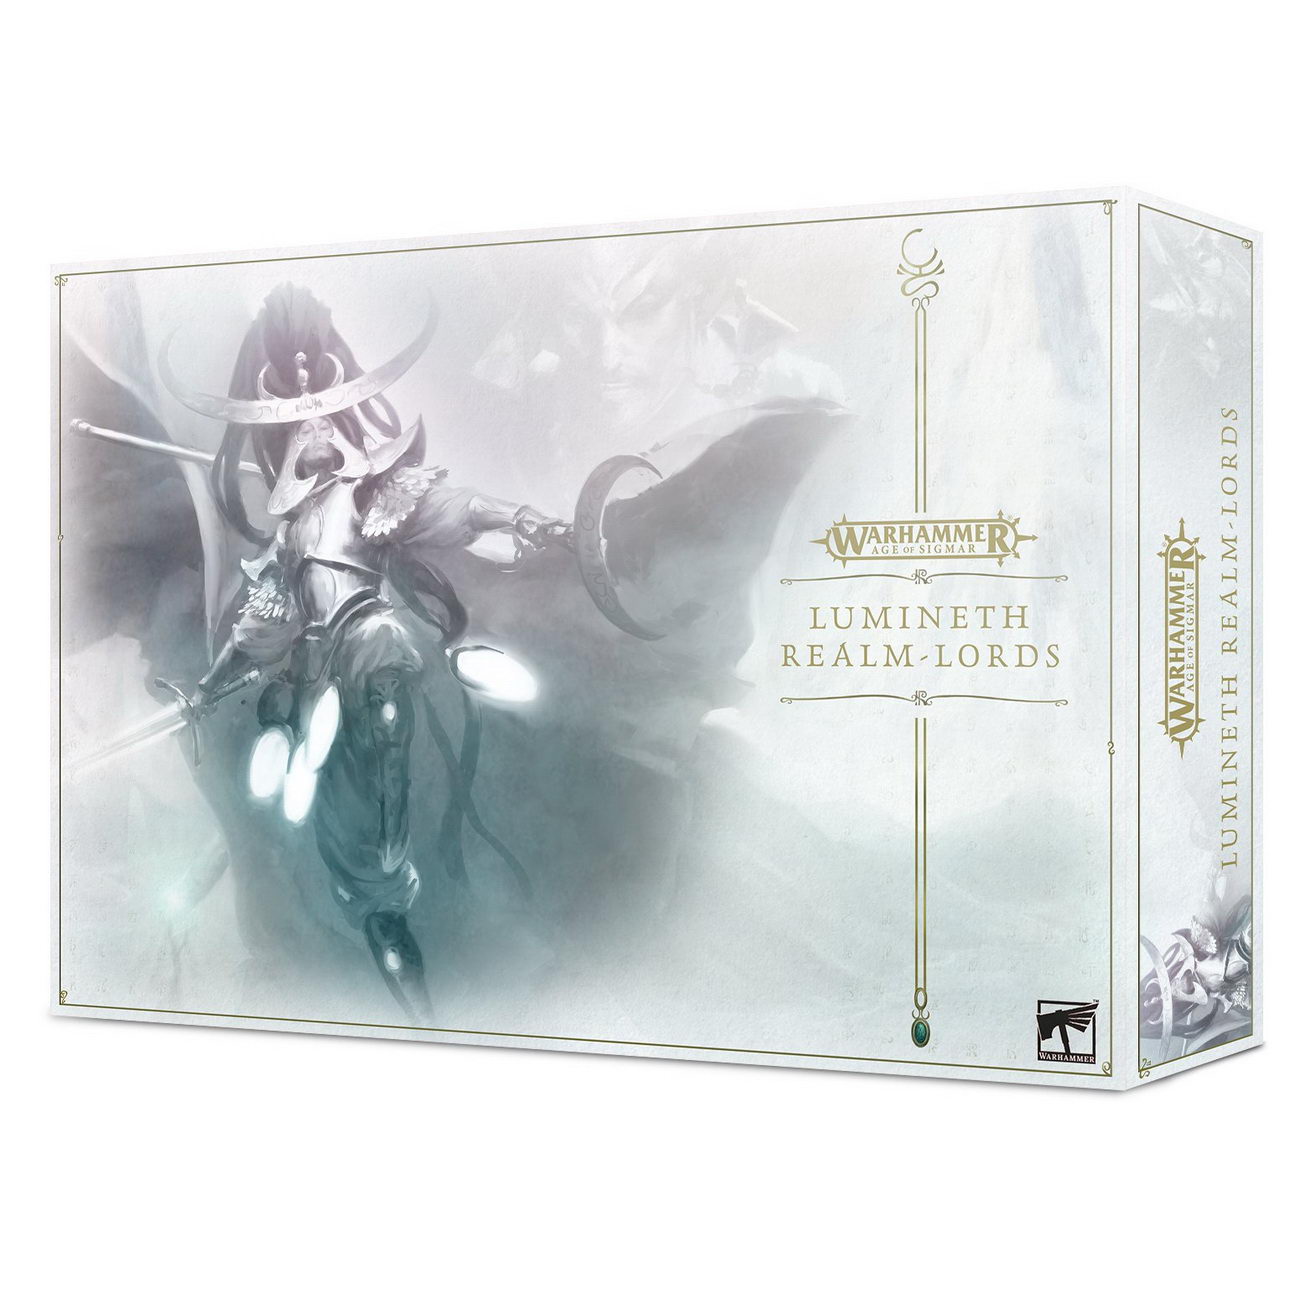 Warhammer: Age of Sigmar - Lumineth Realm-Lords 87-06-04